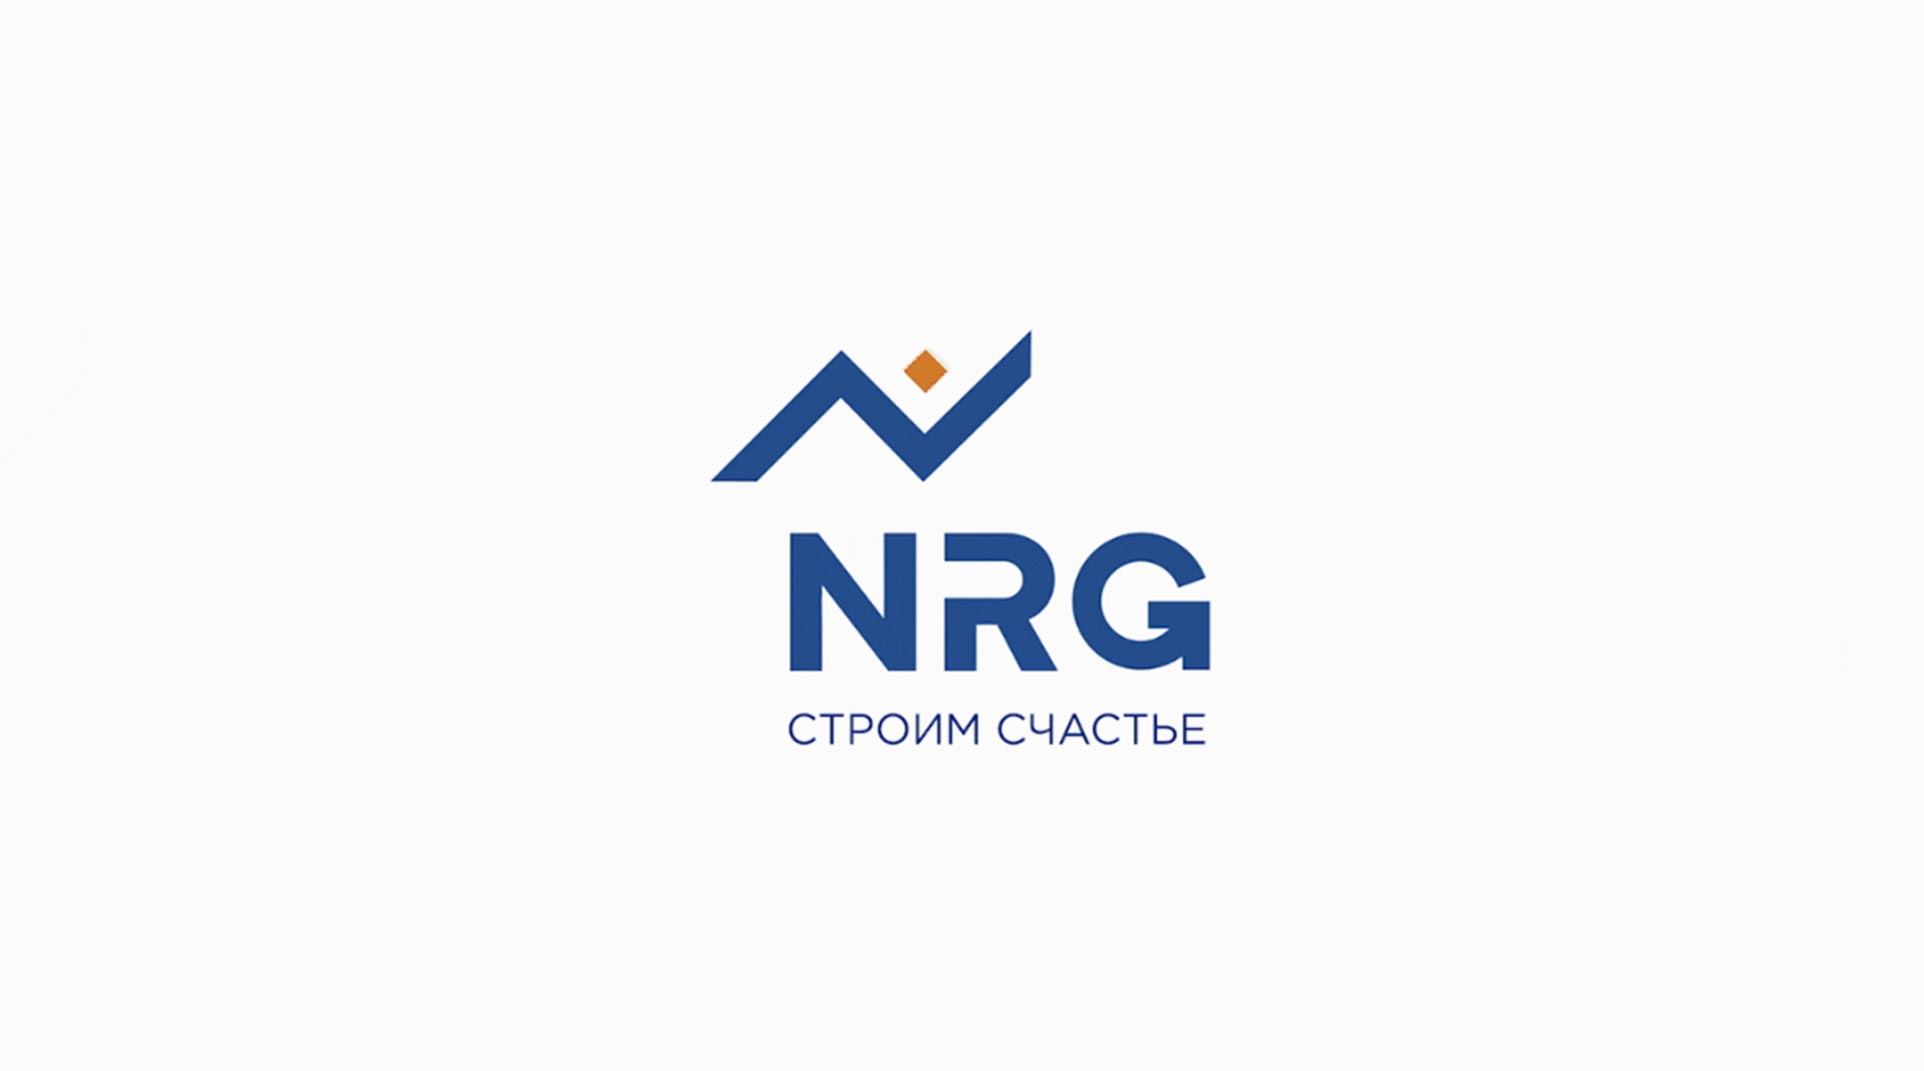 Https ssv uz. NRG логотип. NRG Ташкент. Узбекистан логотип. NRG logo Tashkent.